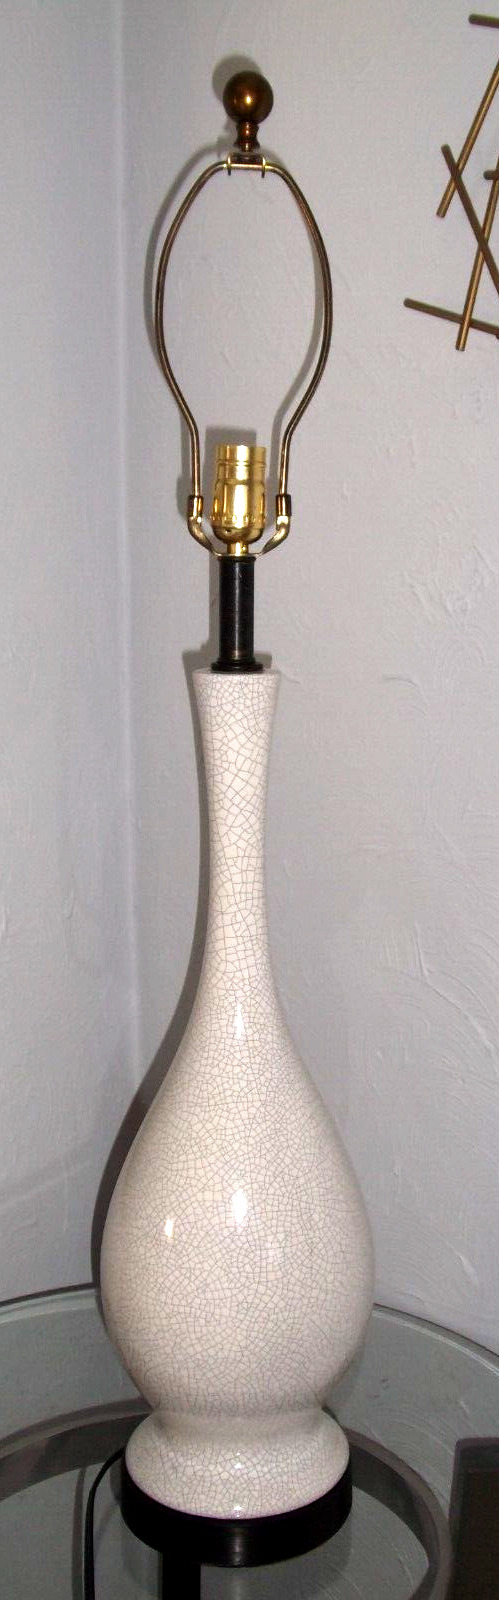 Vintage Mid Century Modern White Crackle Pottery Lamp 1960s Retro